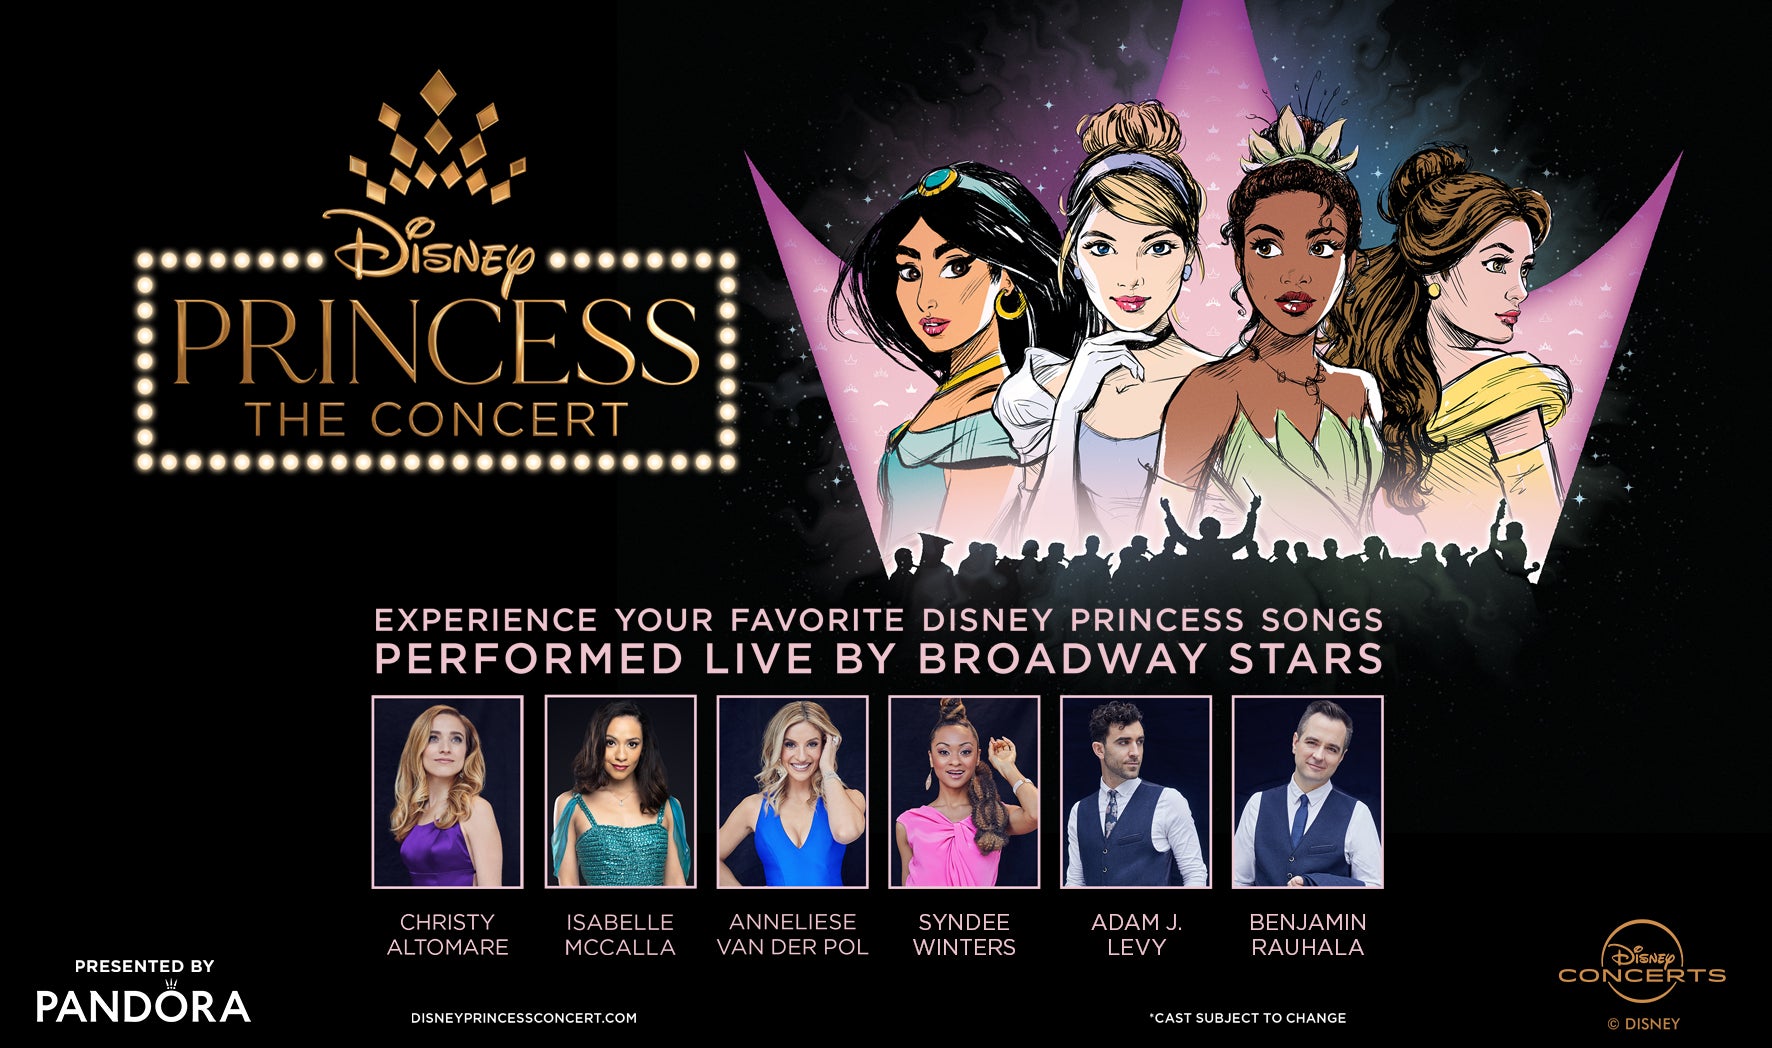 Pandora Presents Disney Princess - The Concert